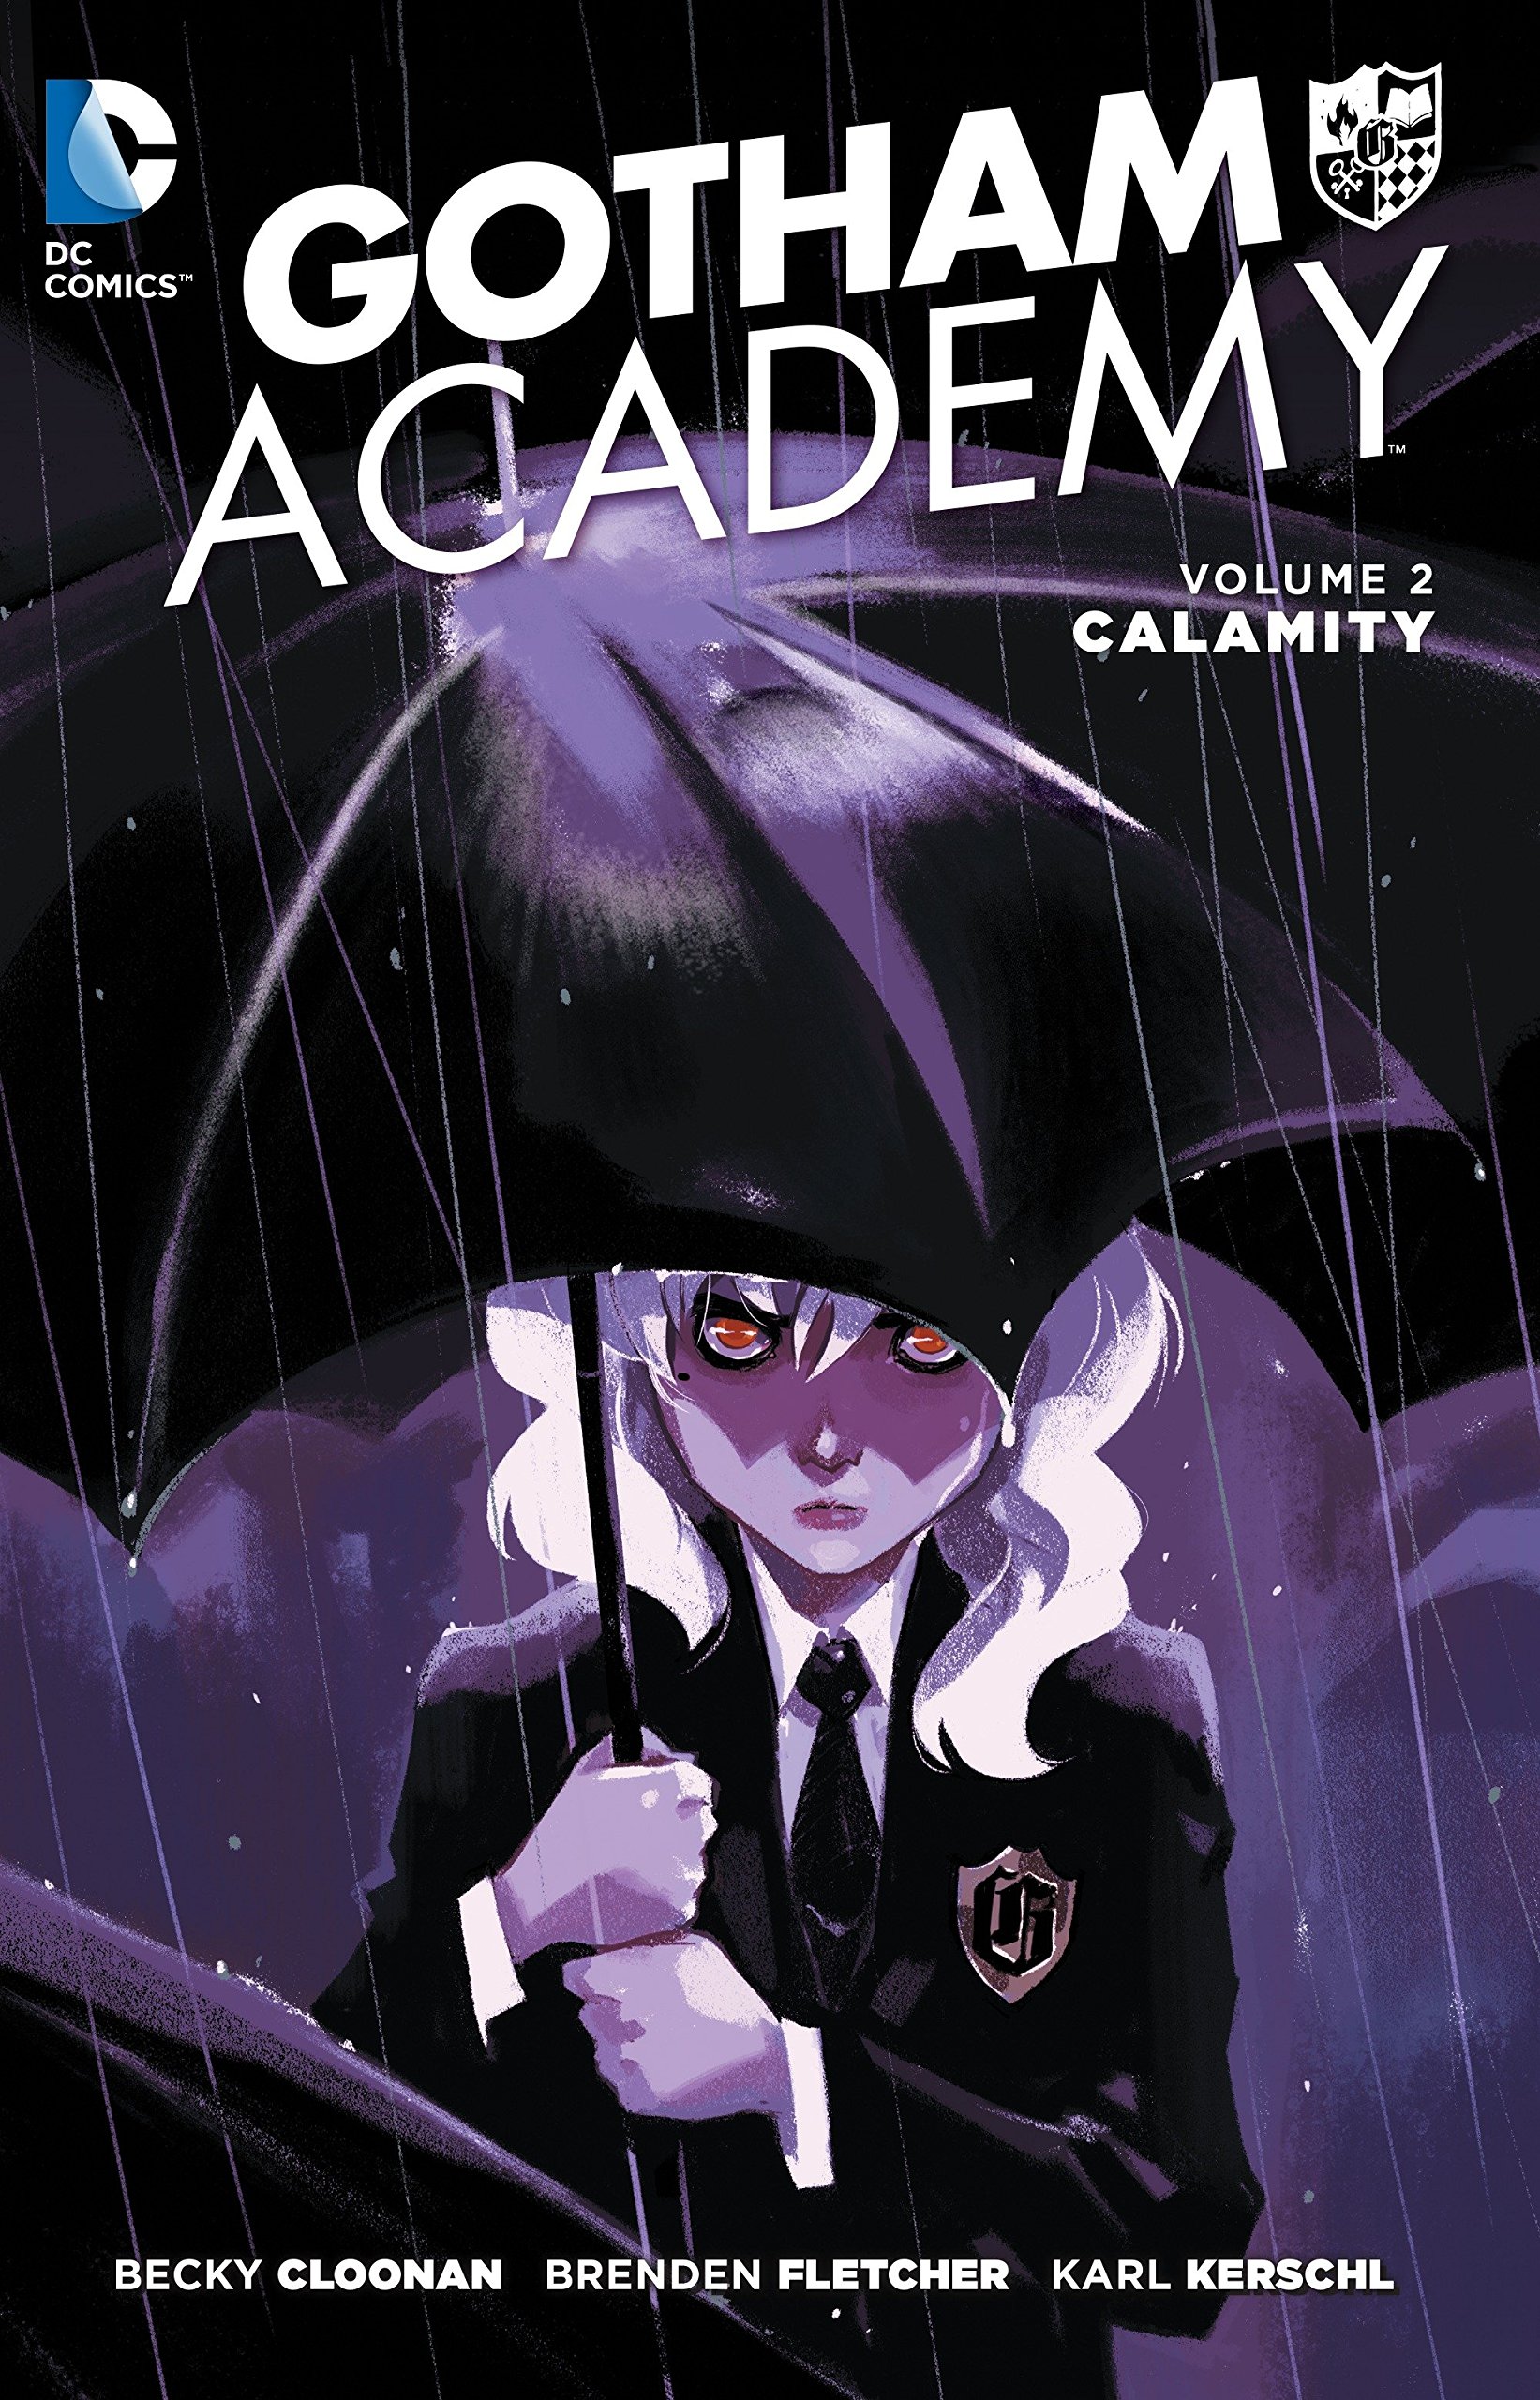 Gotham Academy Graphic Novel Volume 2 Calamity